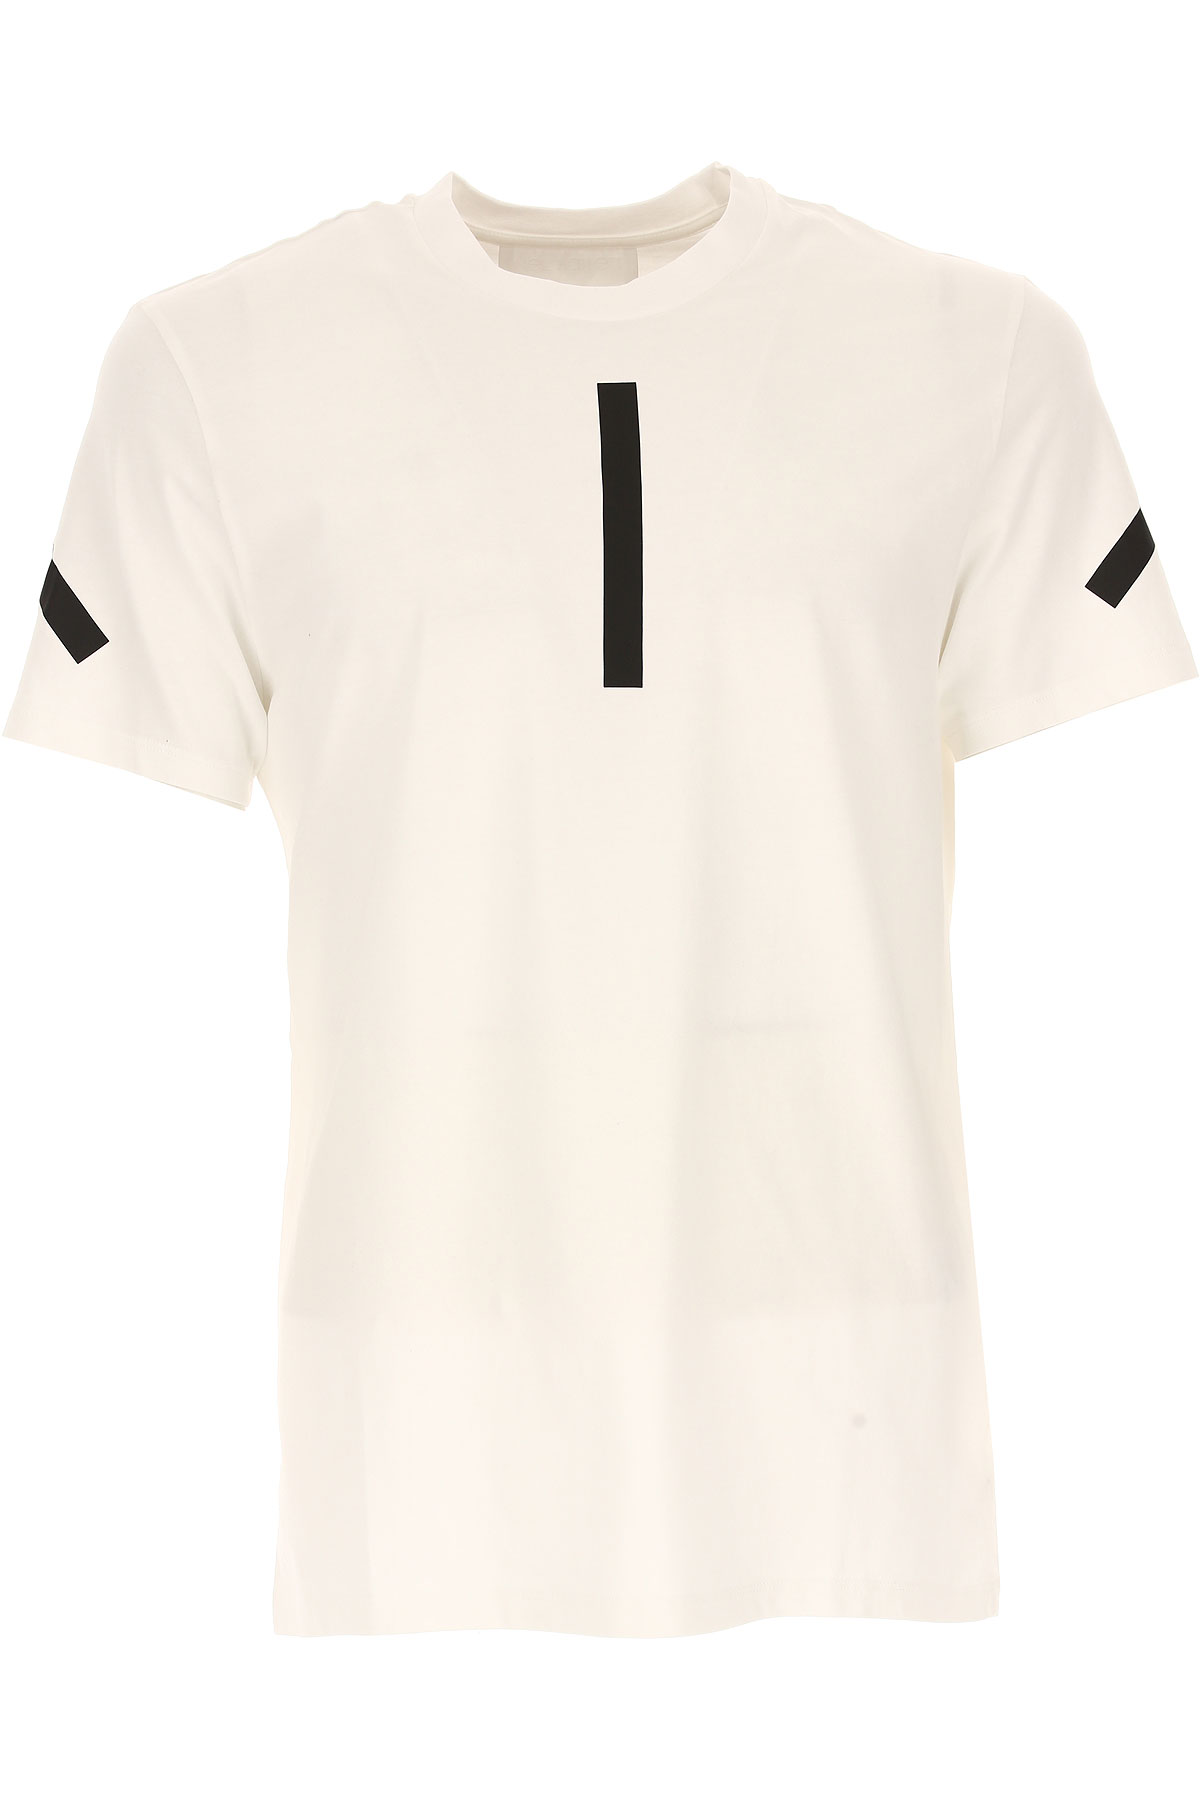 Neil Barrett T-shirt Homme, Blanc, Coton, 2017, L M S XL